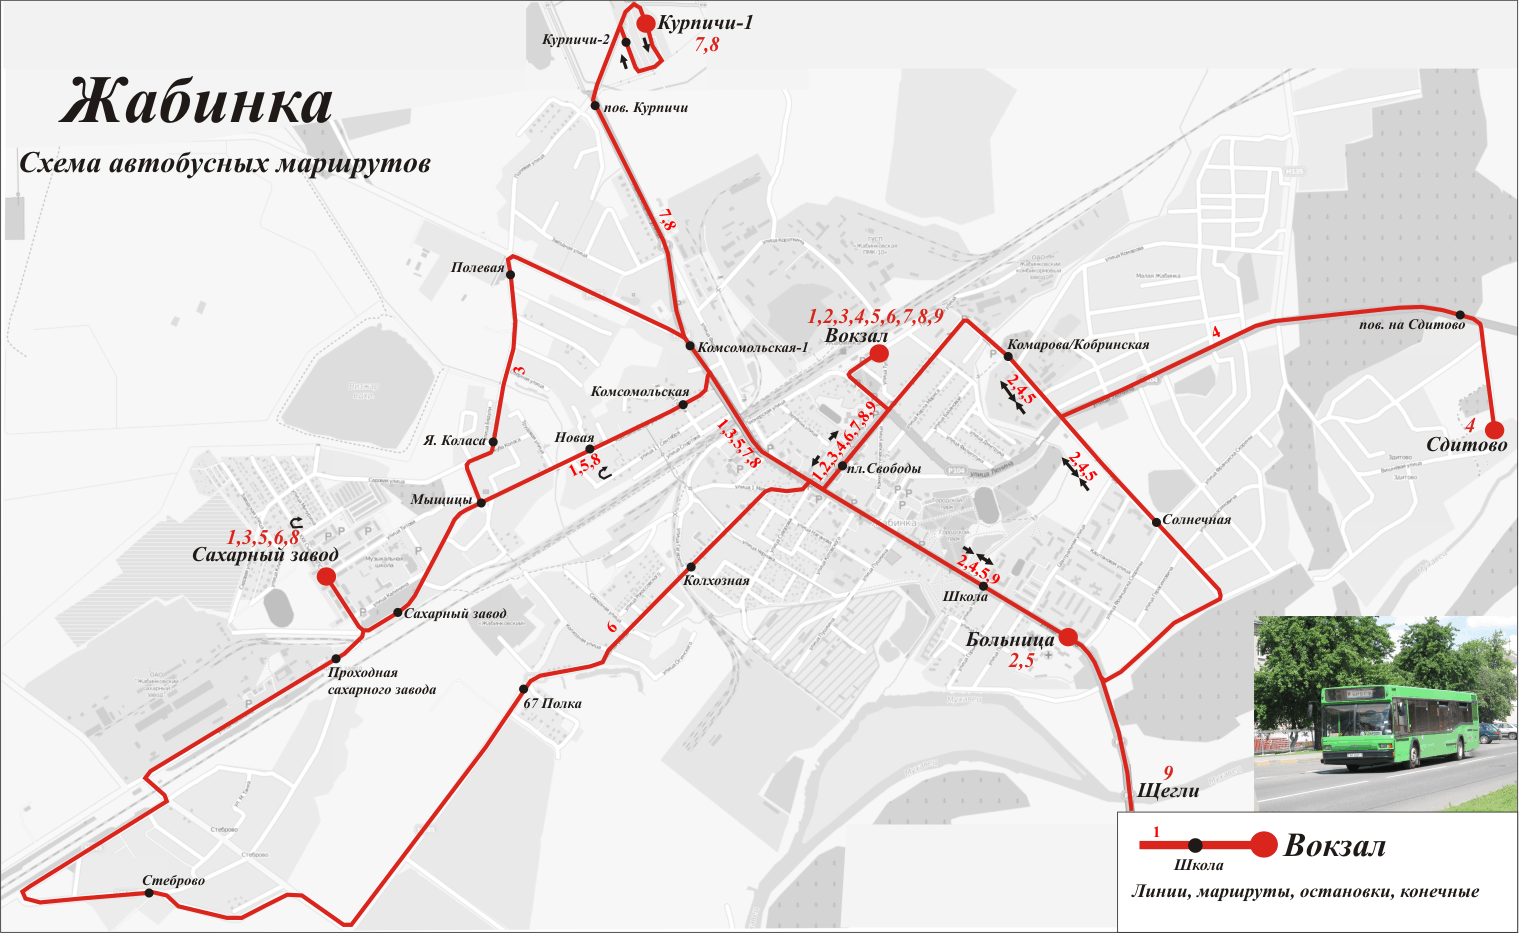 Zhabinka — Maps; Maps routes